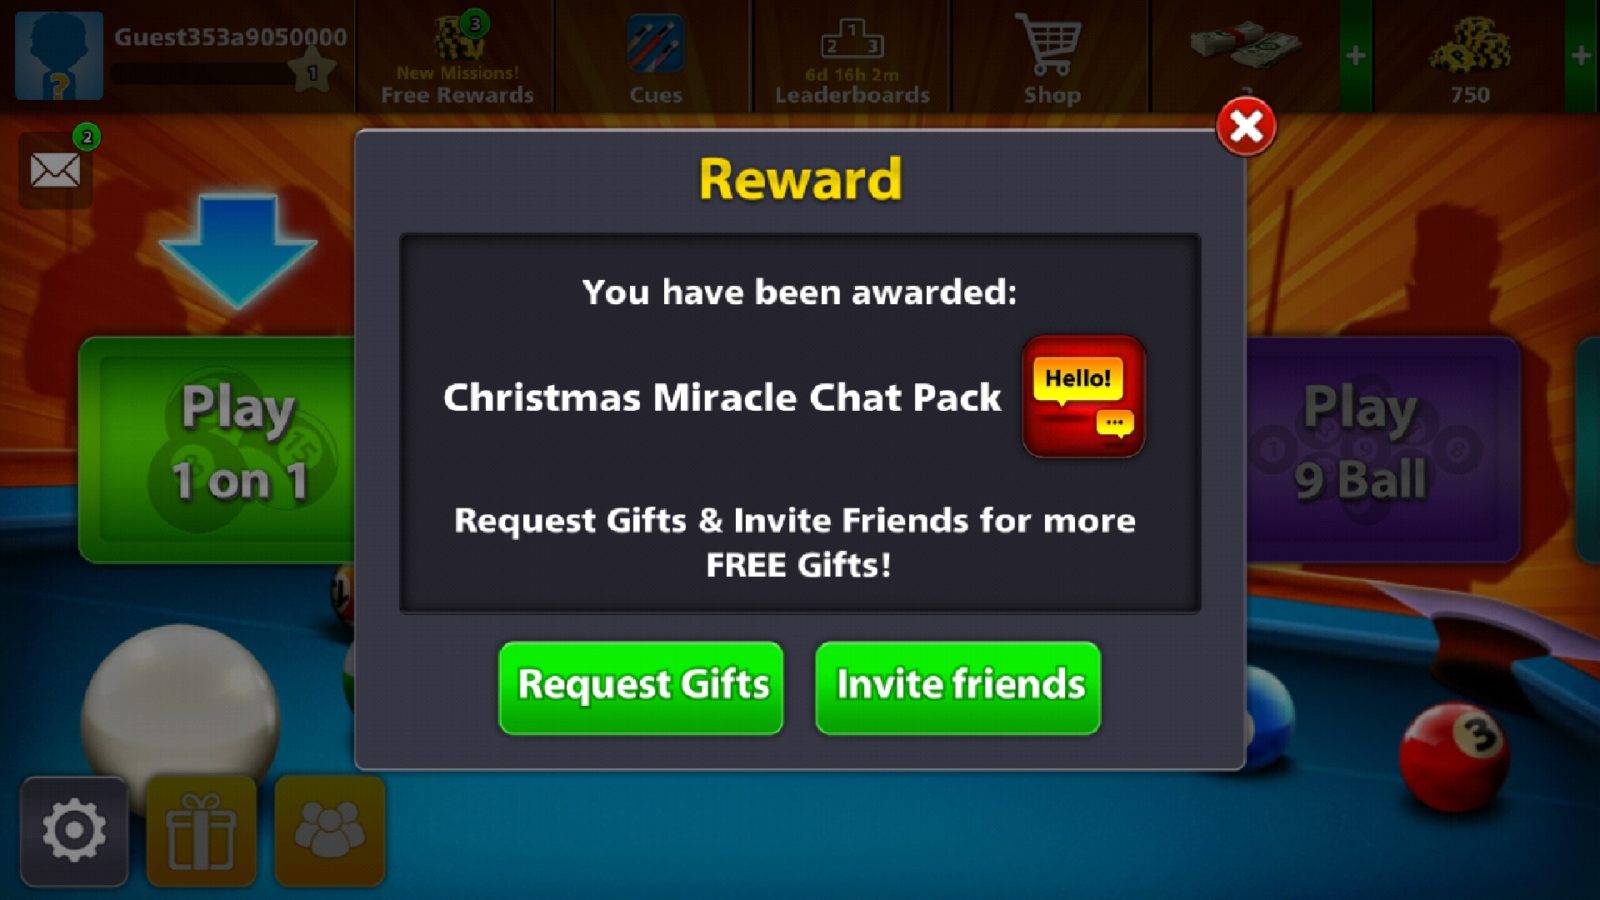 Christmas Miracle Chat Pack Reward Link